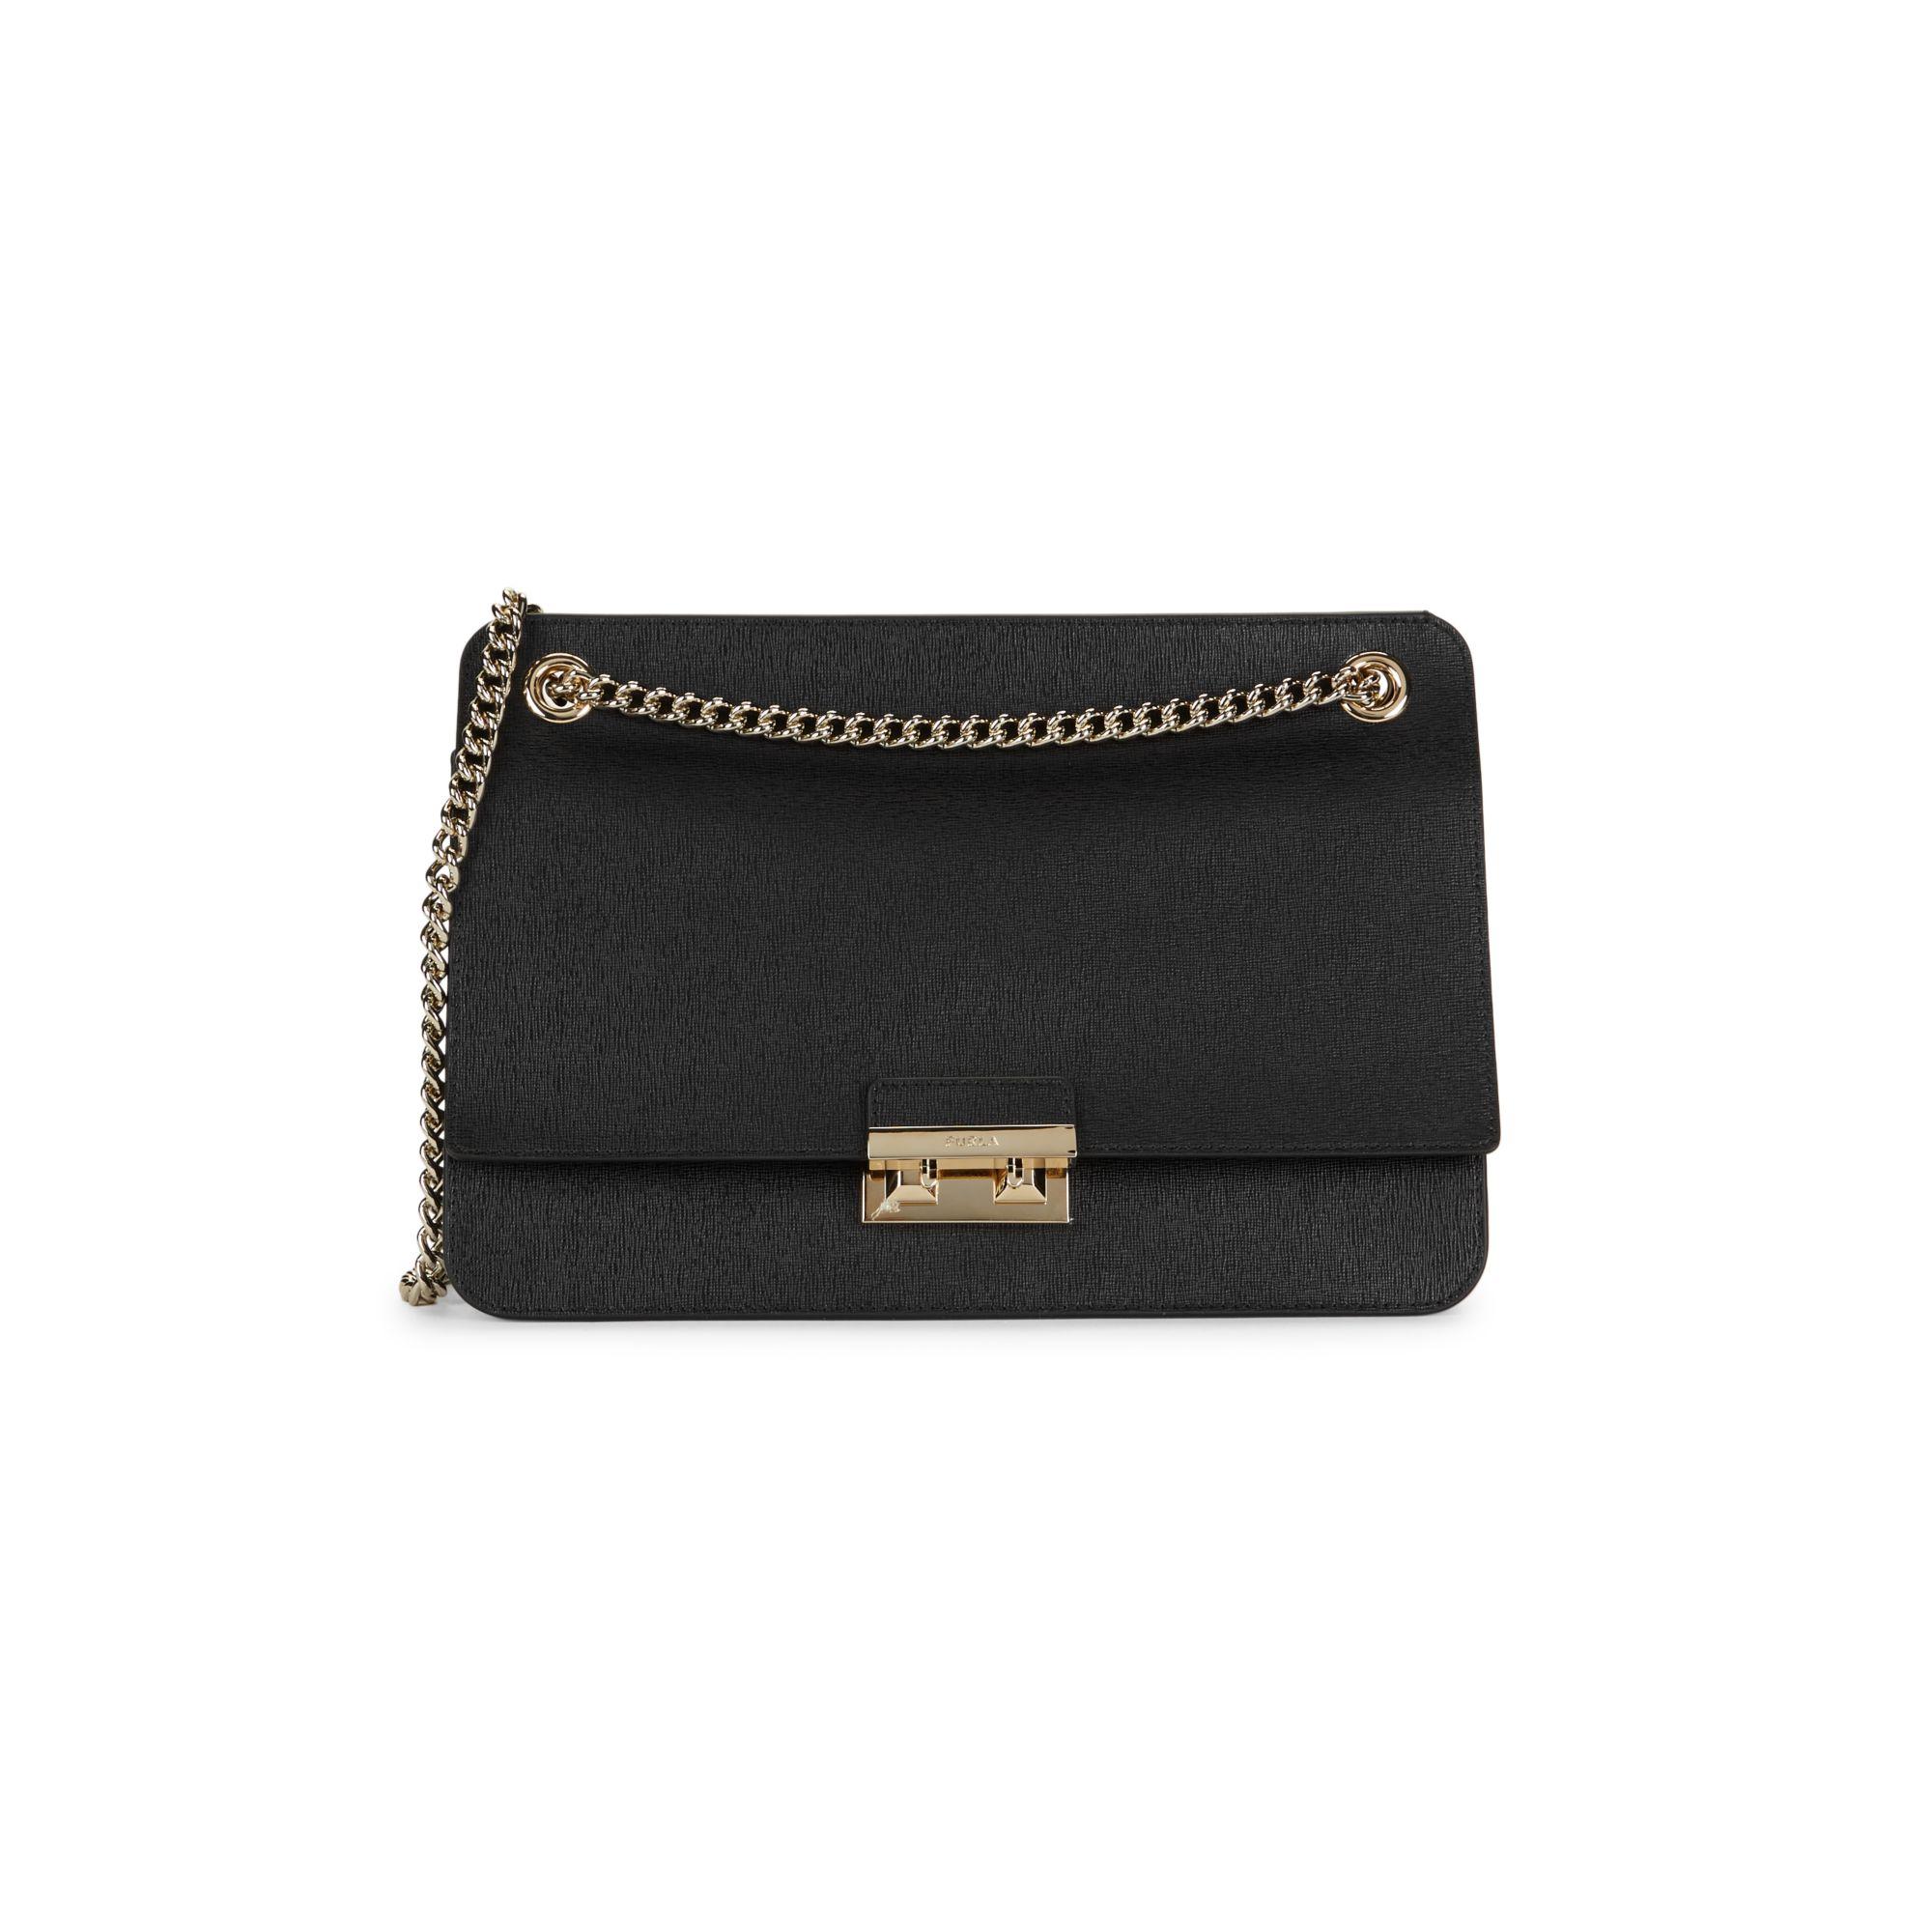 Furla Bella M Leather Shoulder Bag in Onyx (Black) | Lyst